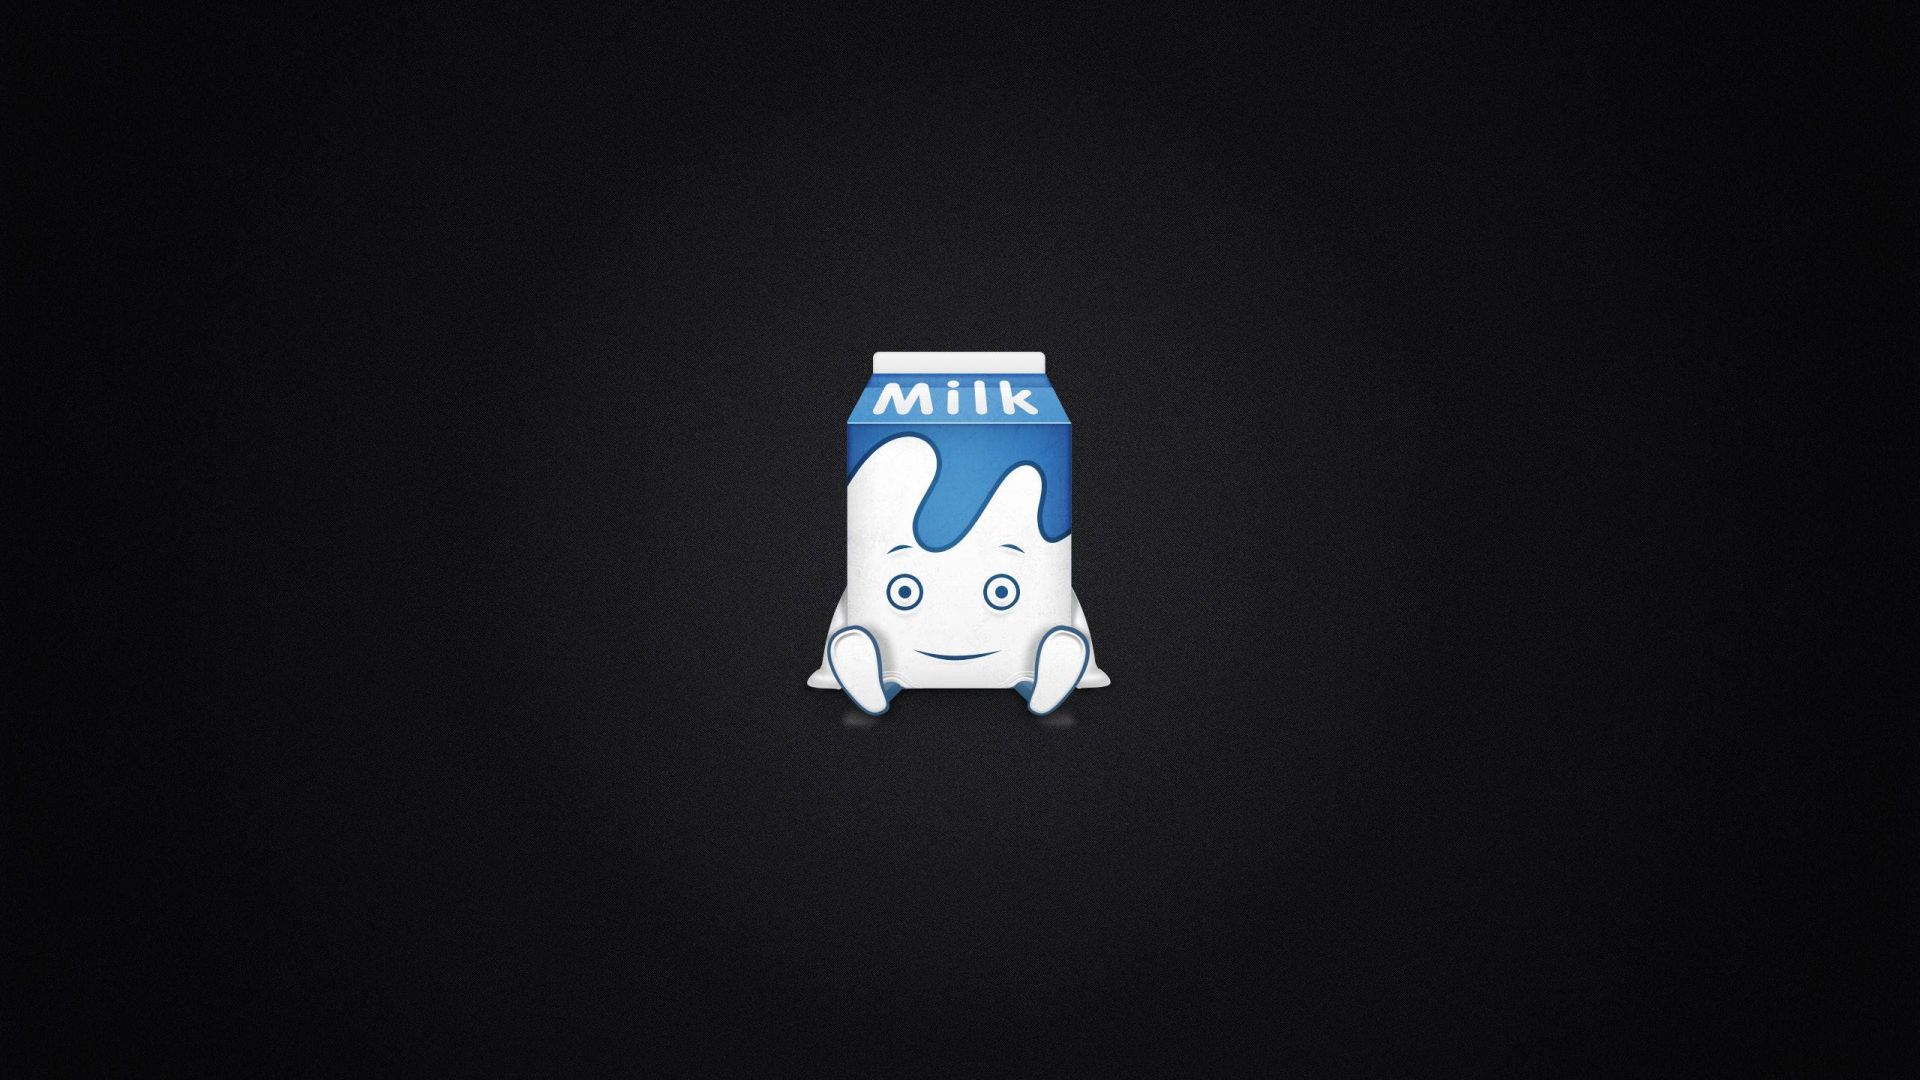 Wallpaper Minimalism, milk cane, milk, funny